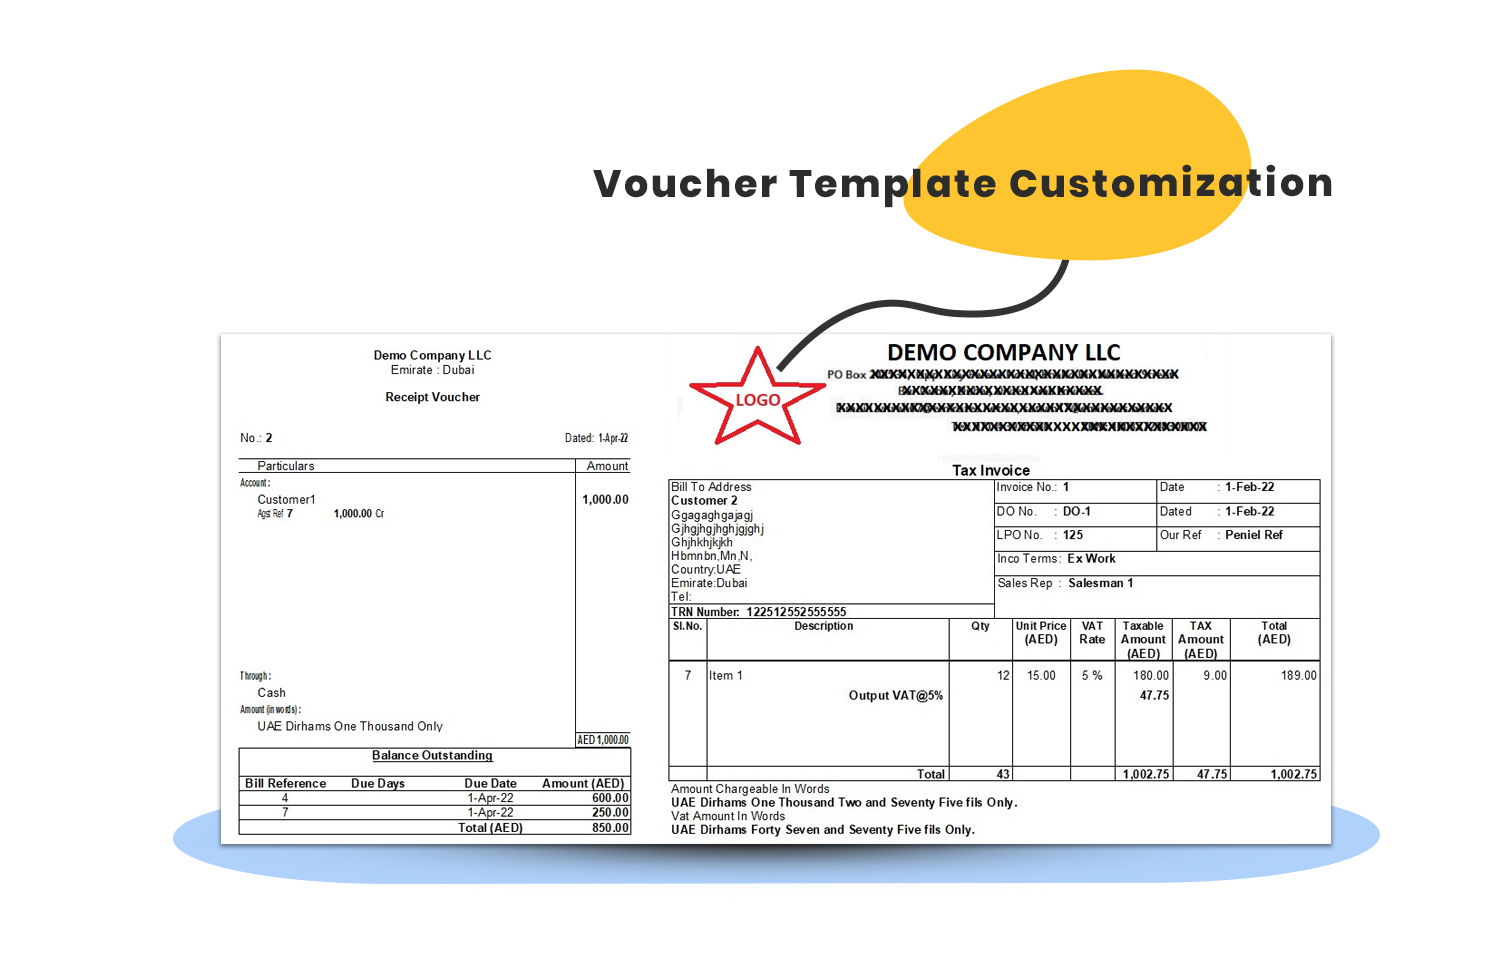 Custom Voucher Templates Tally Customization